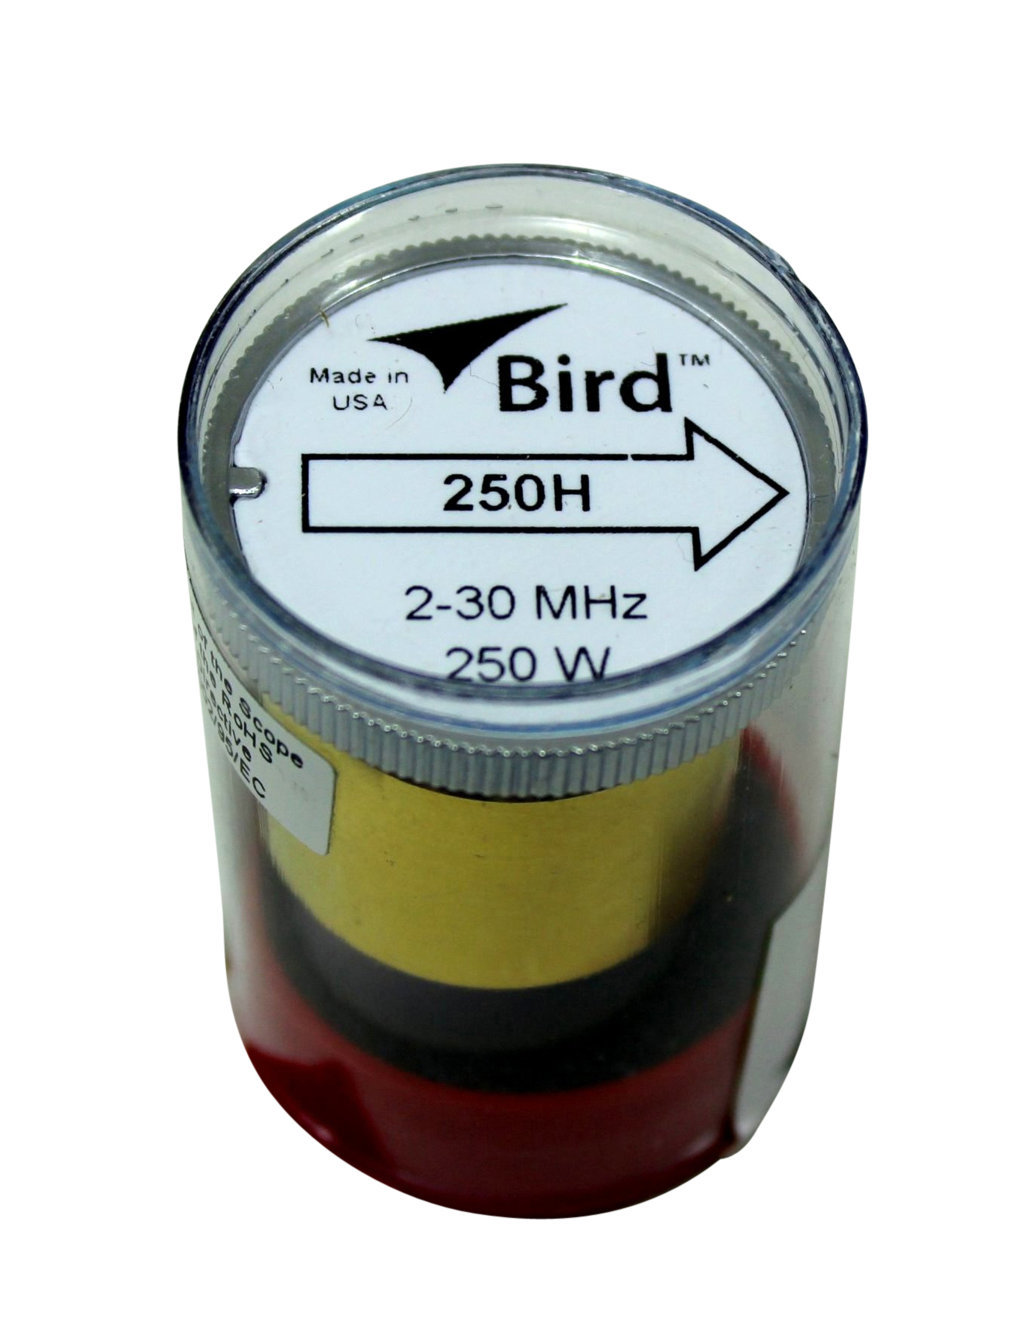 Bird Electronic - Bird Element 250H 250W 2-30 MHz #BRD-250H